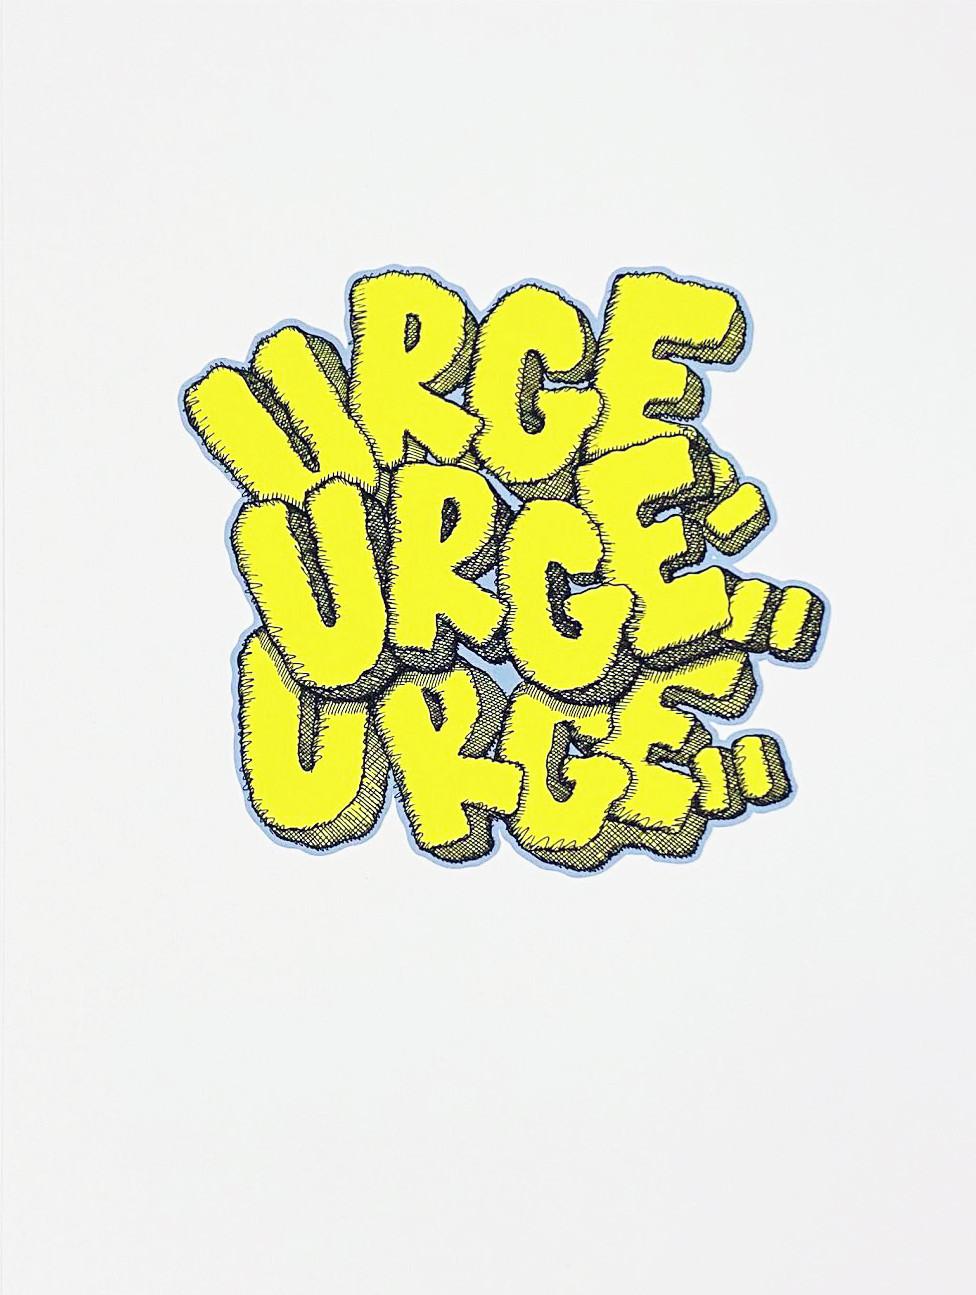 URGE Title Page